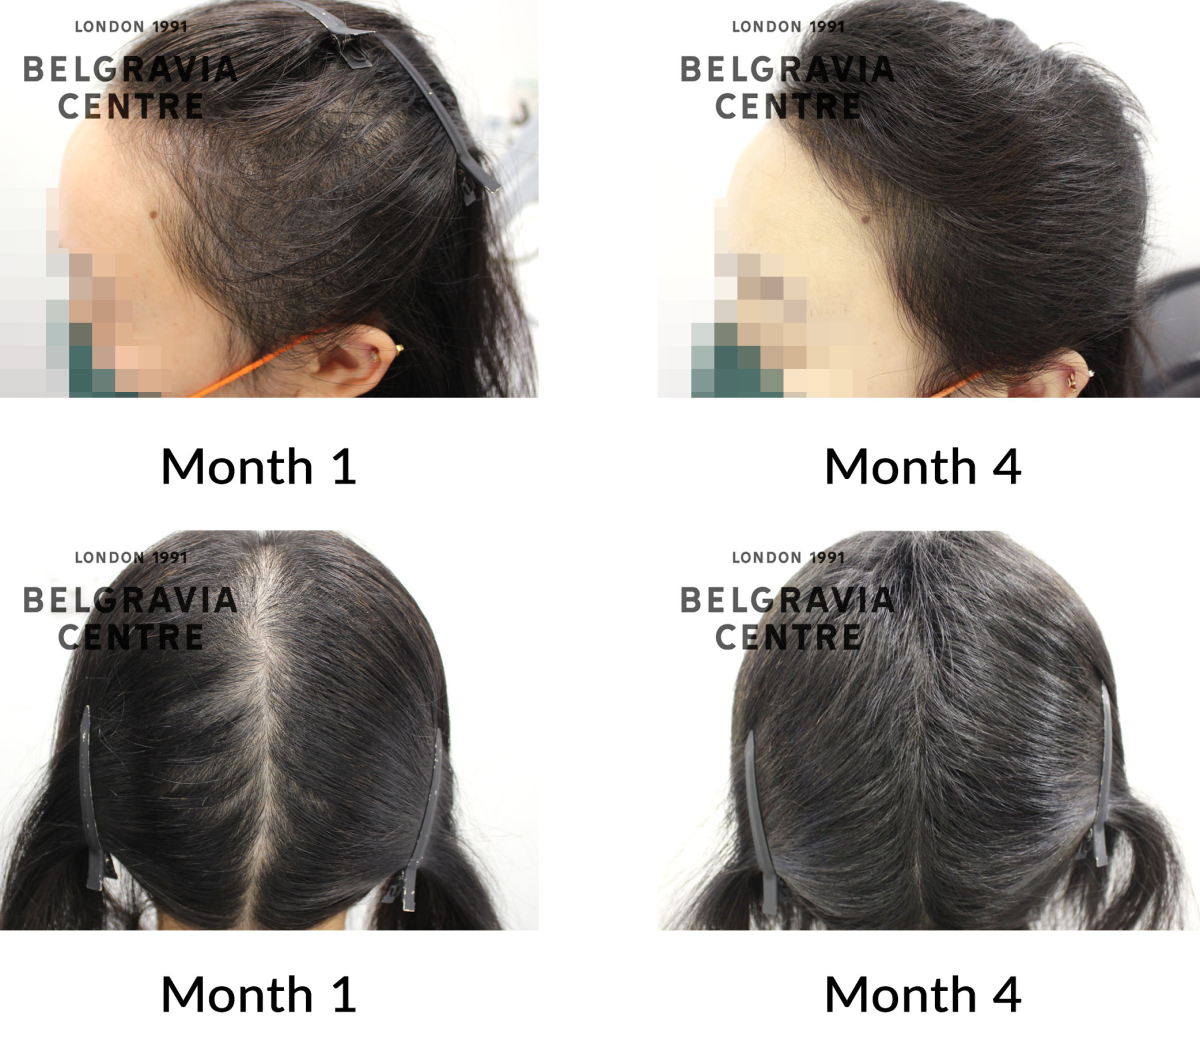 telogen fffluvium and female pattern hair loss the belgravia centre 434725